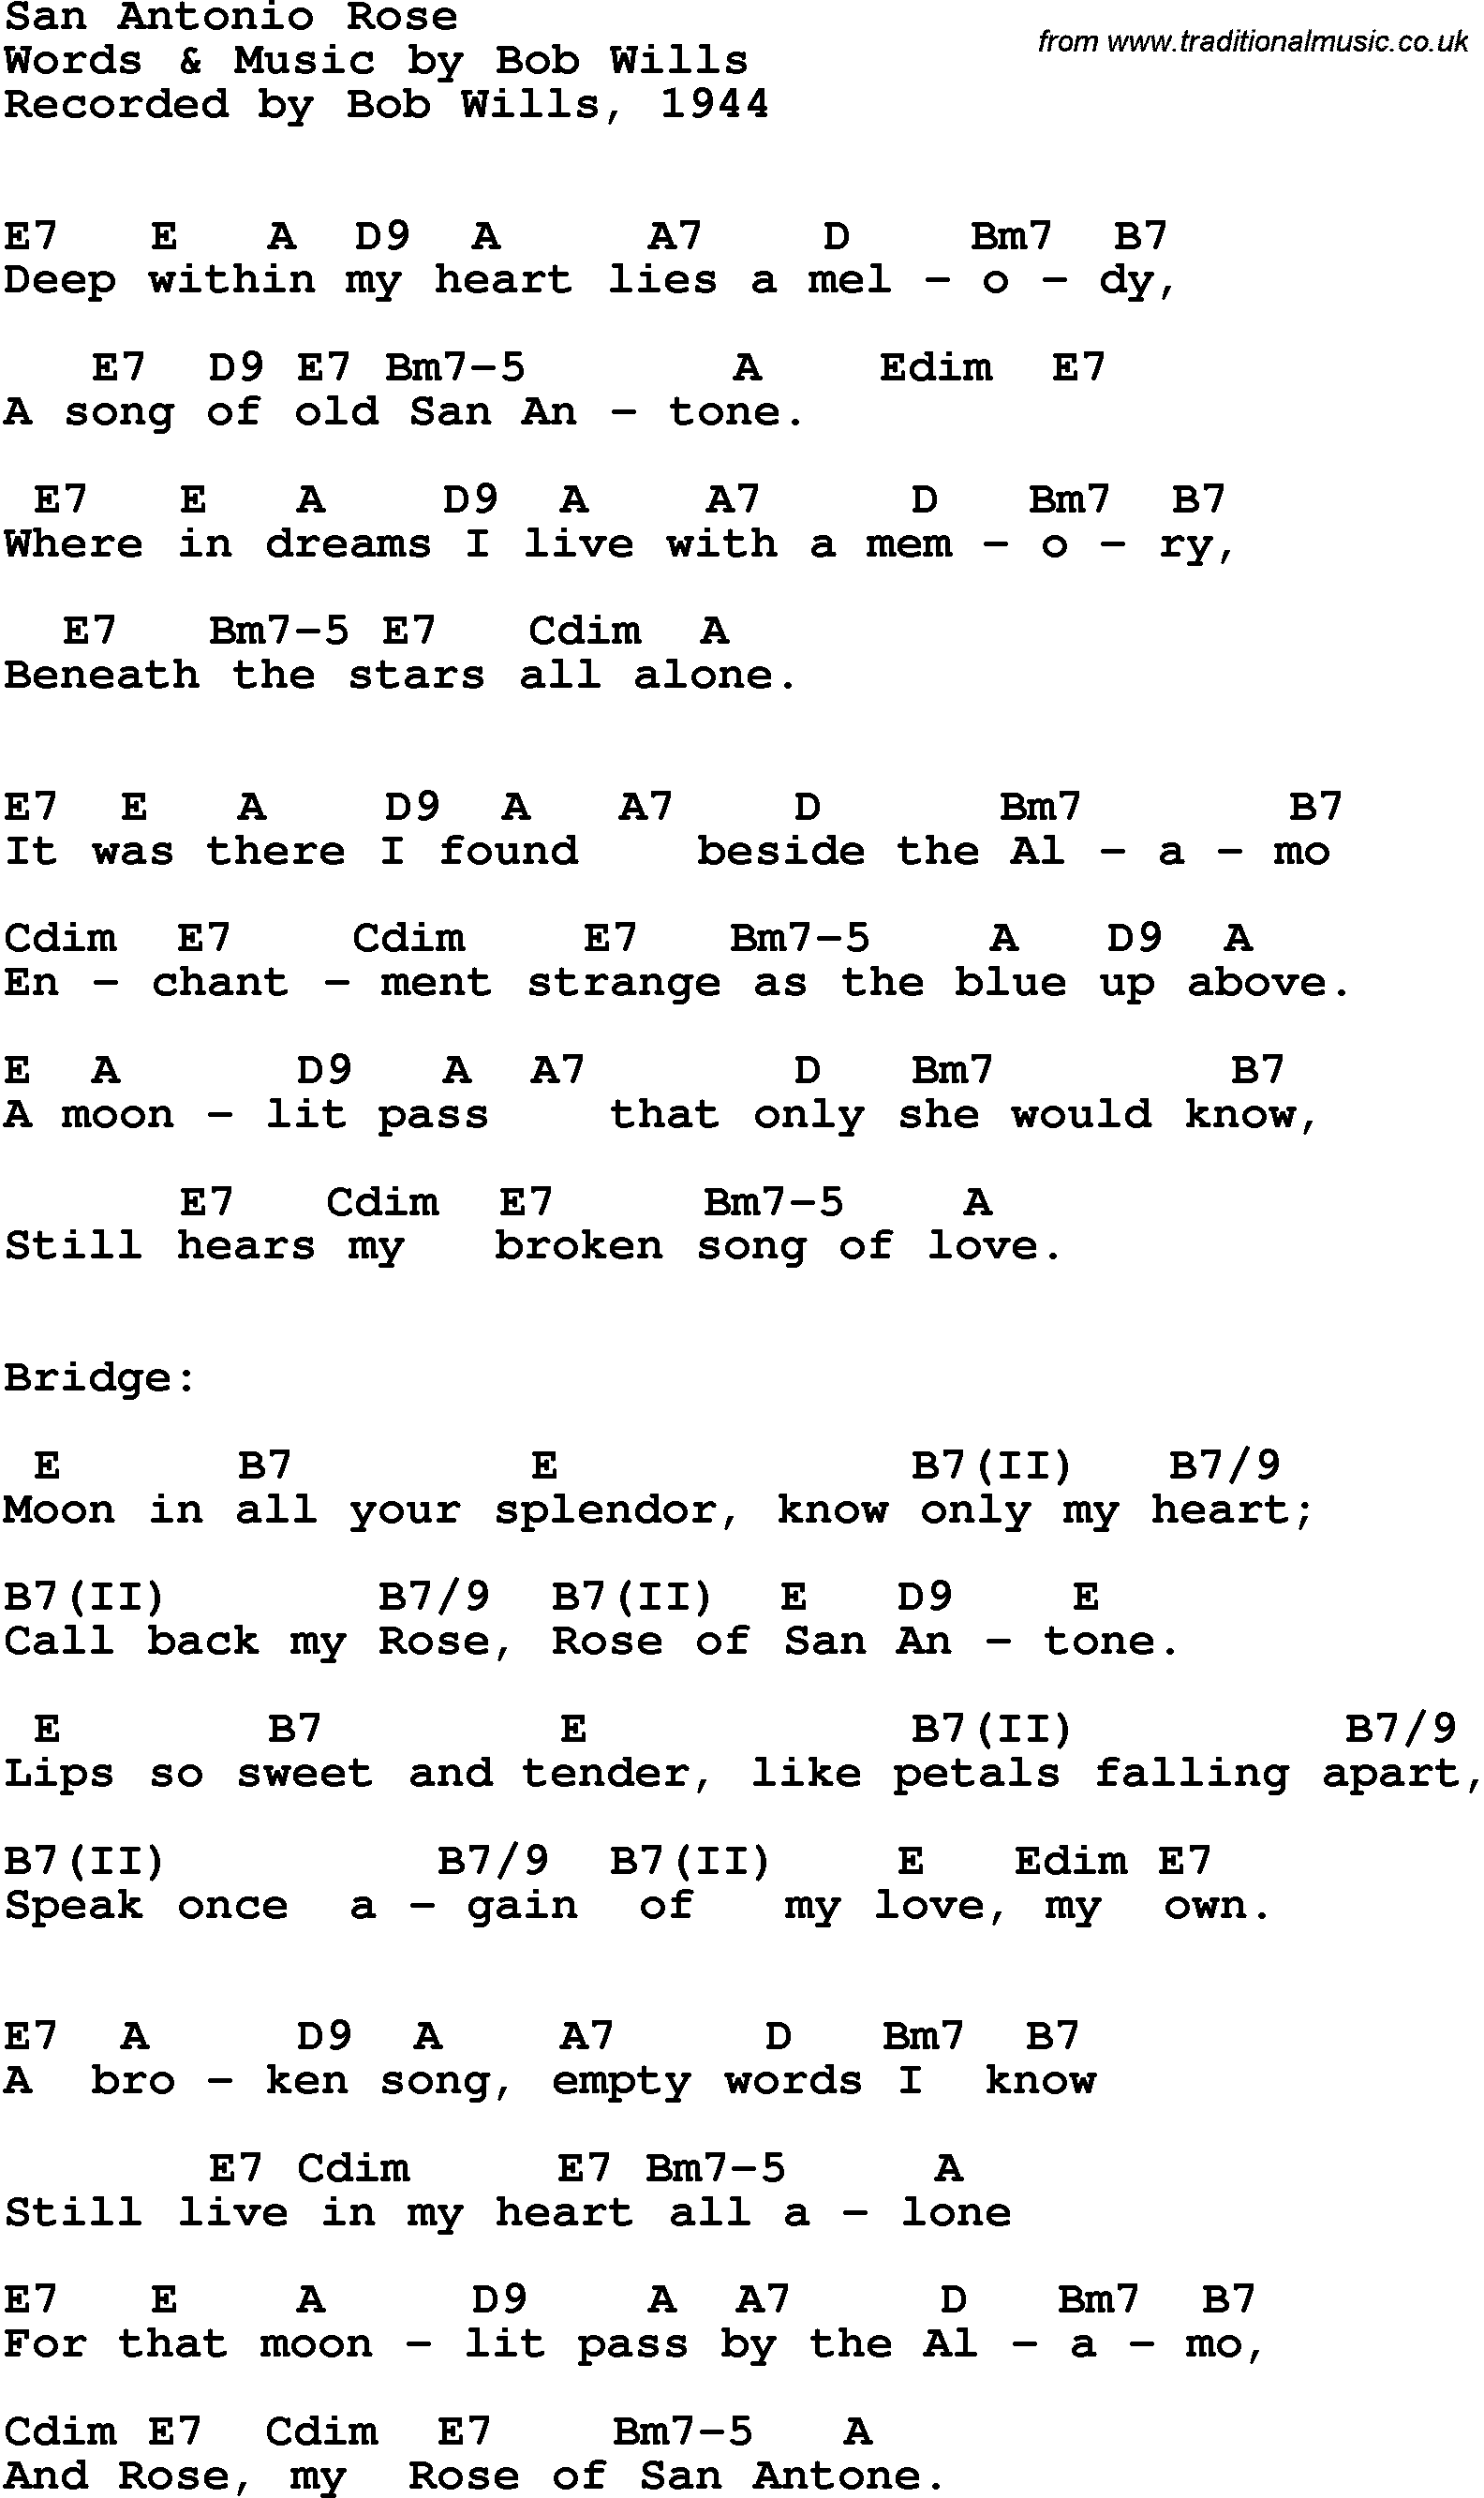 Song lyrics with guitar chords for San Antonio Rose - Bob Wills, 1944